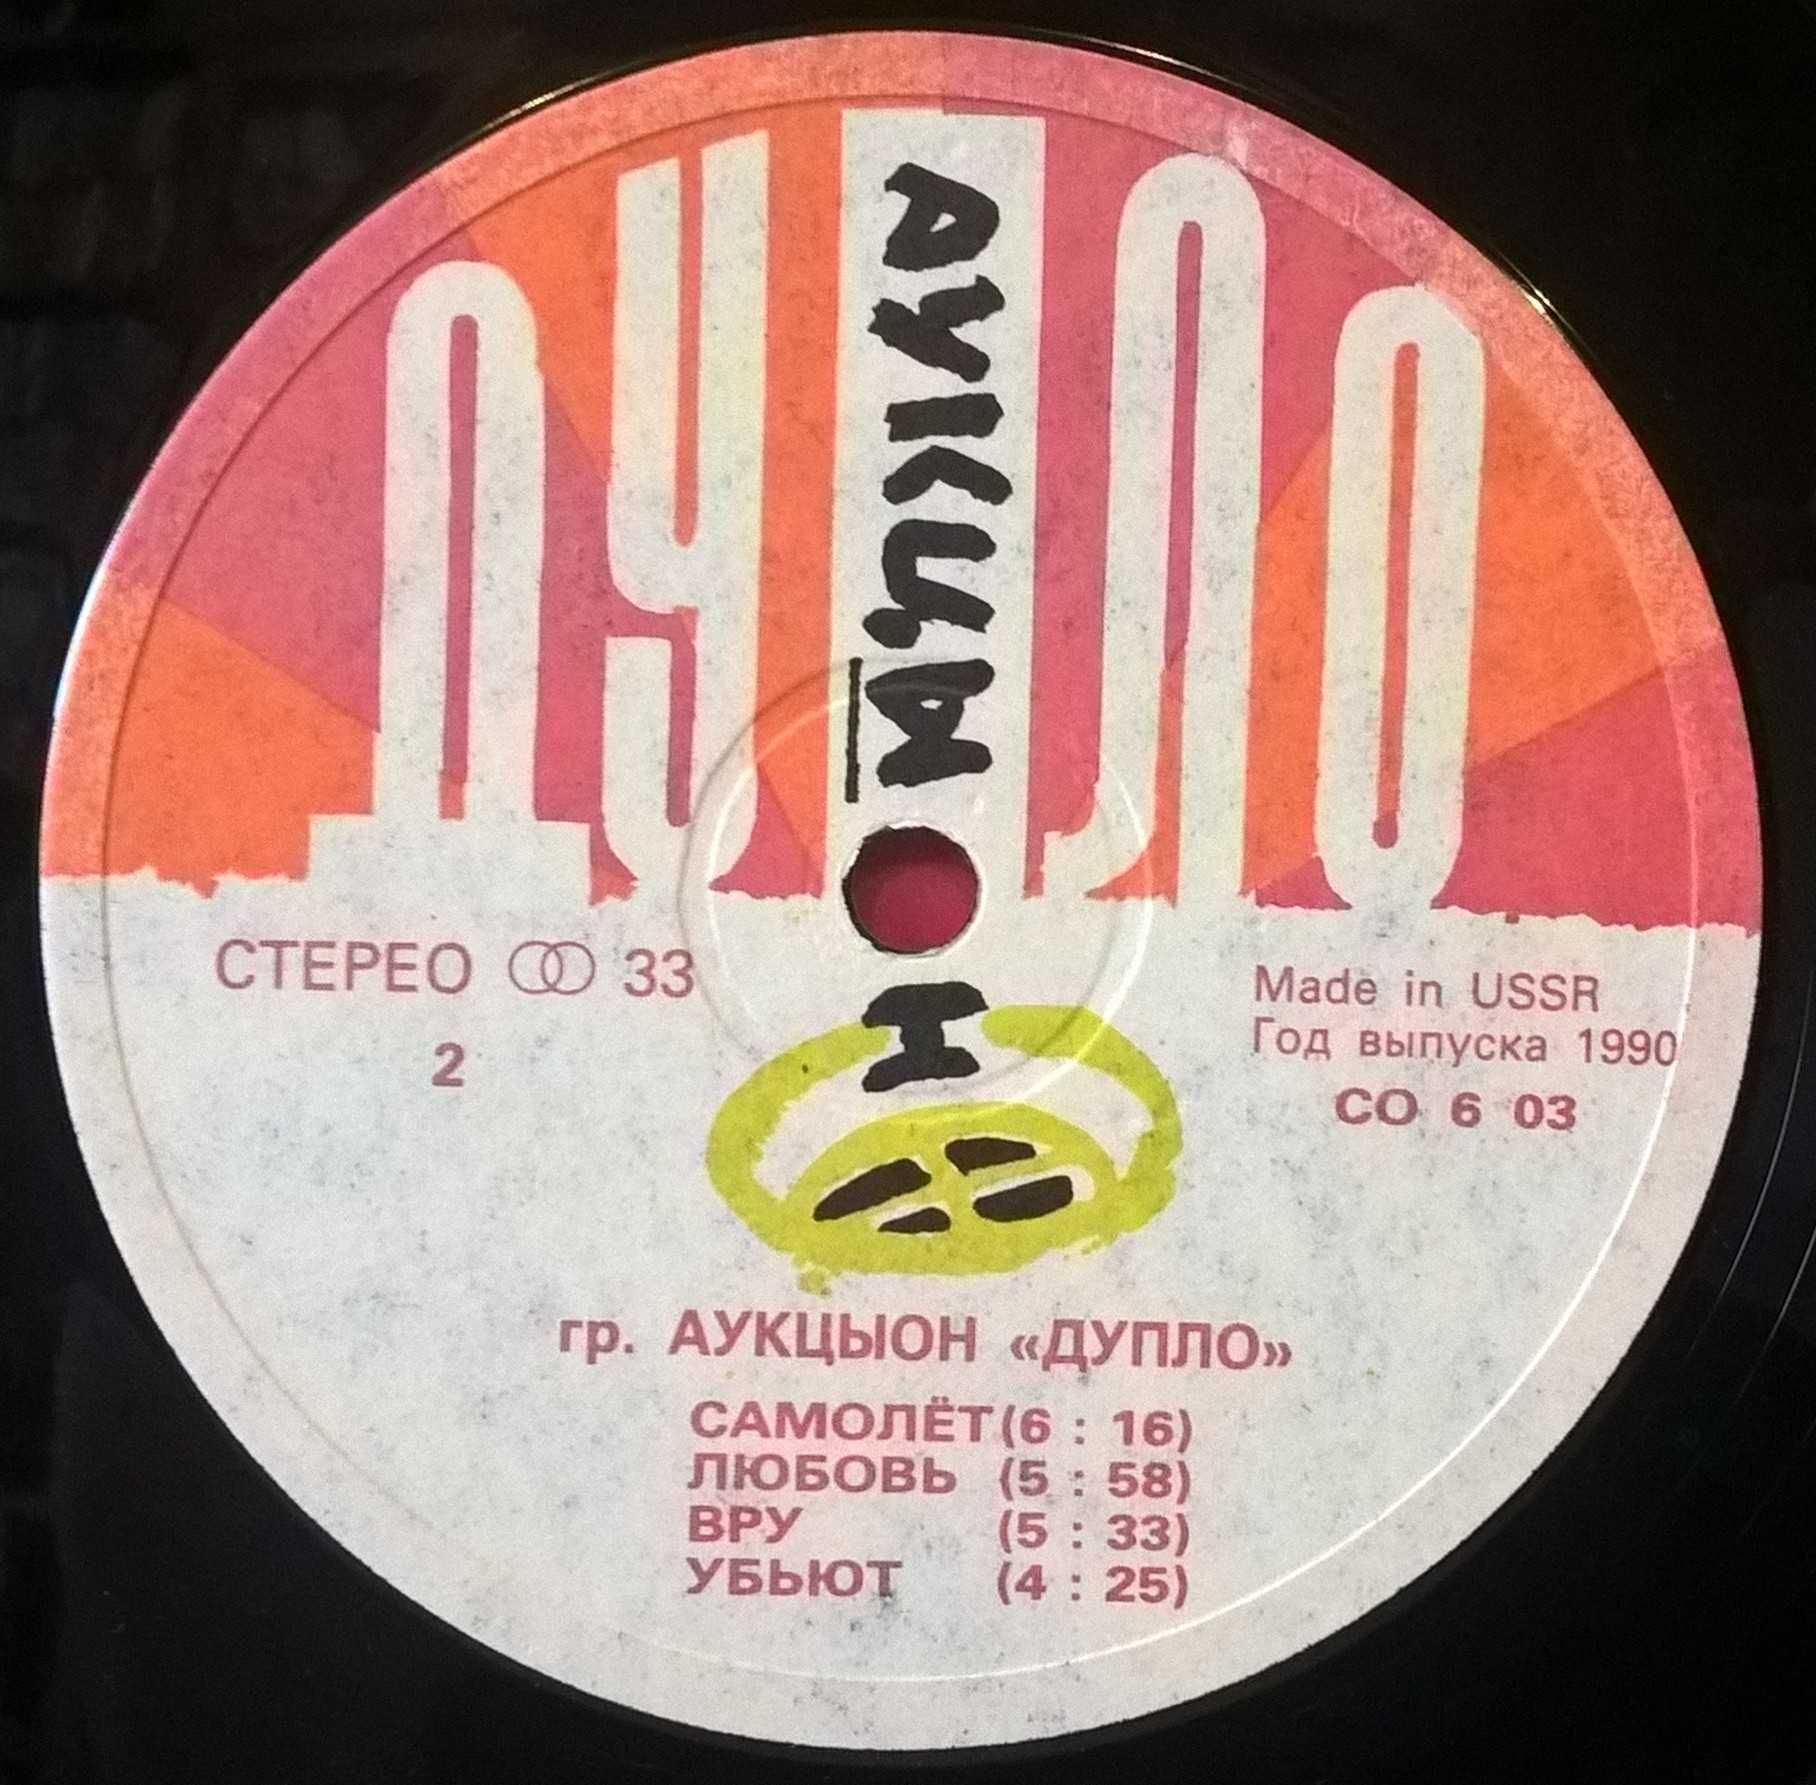 Аукцыон - Дупло - 1990. (LP). 12. Vinyl. Пластинка. Russia. + Постер.